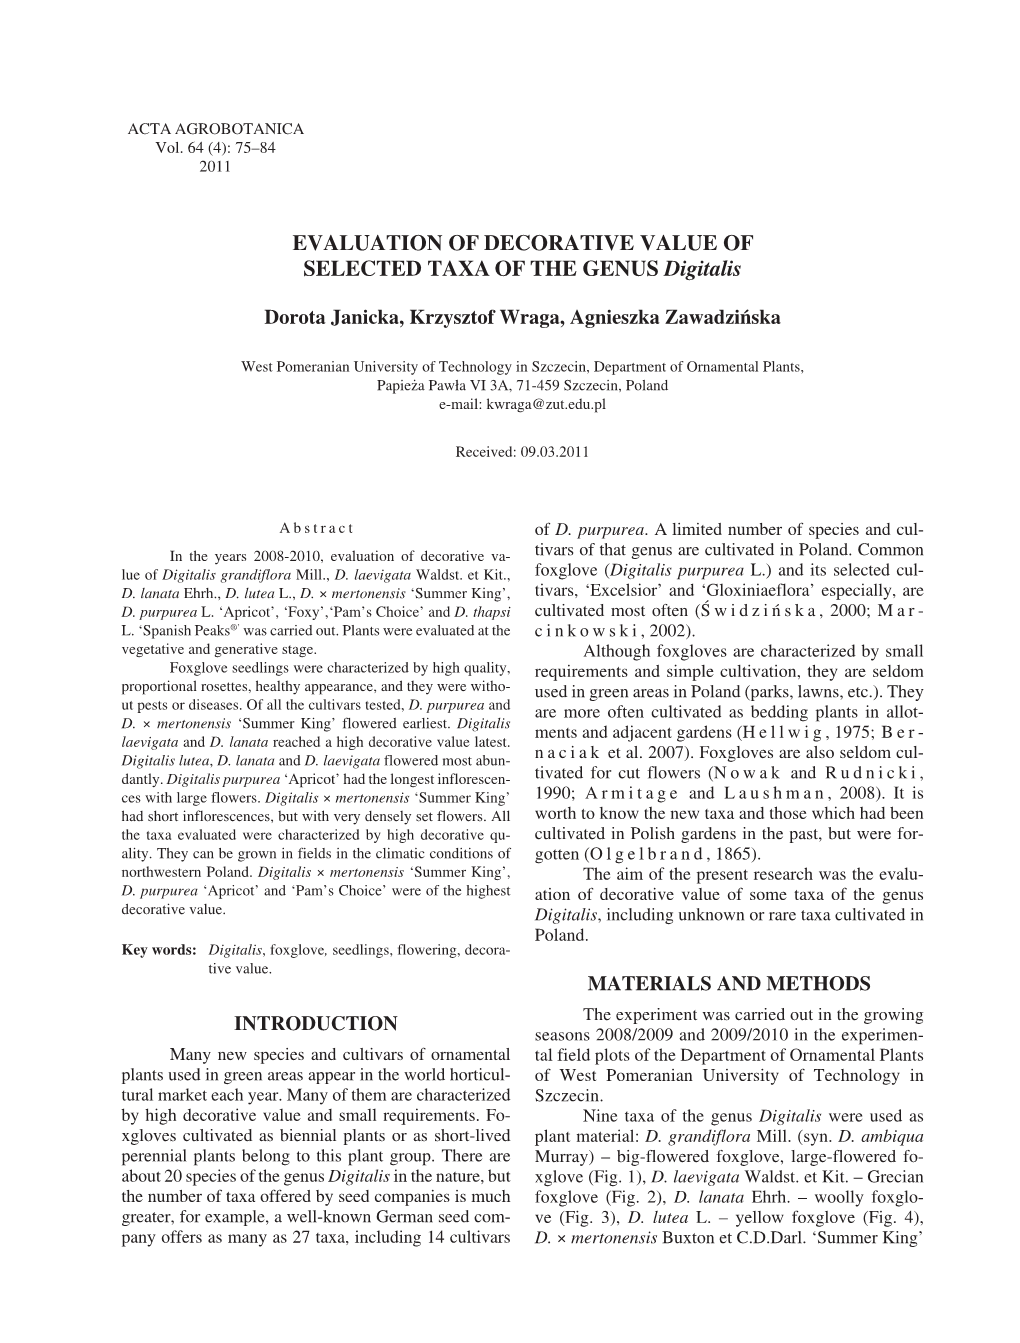 EVALUATION of DECORATIVE VALUE of SELECTED TAXA of the GENUS Digitalis